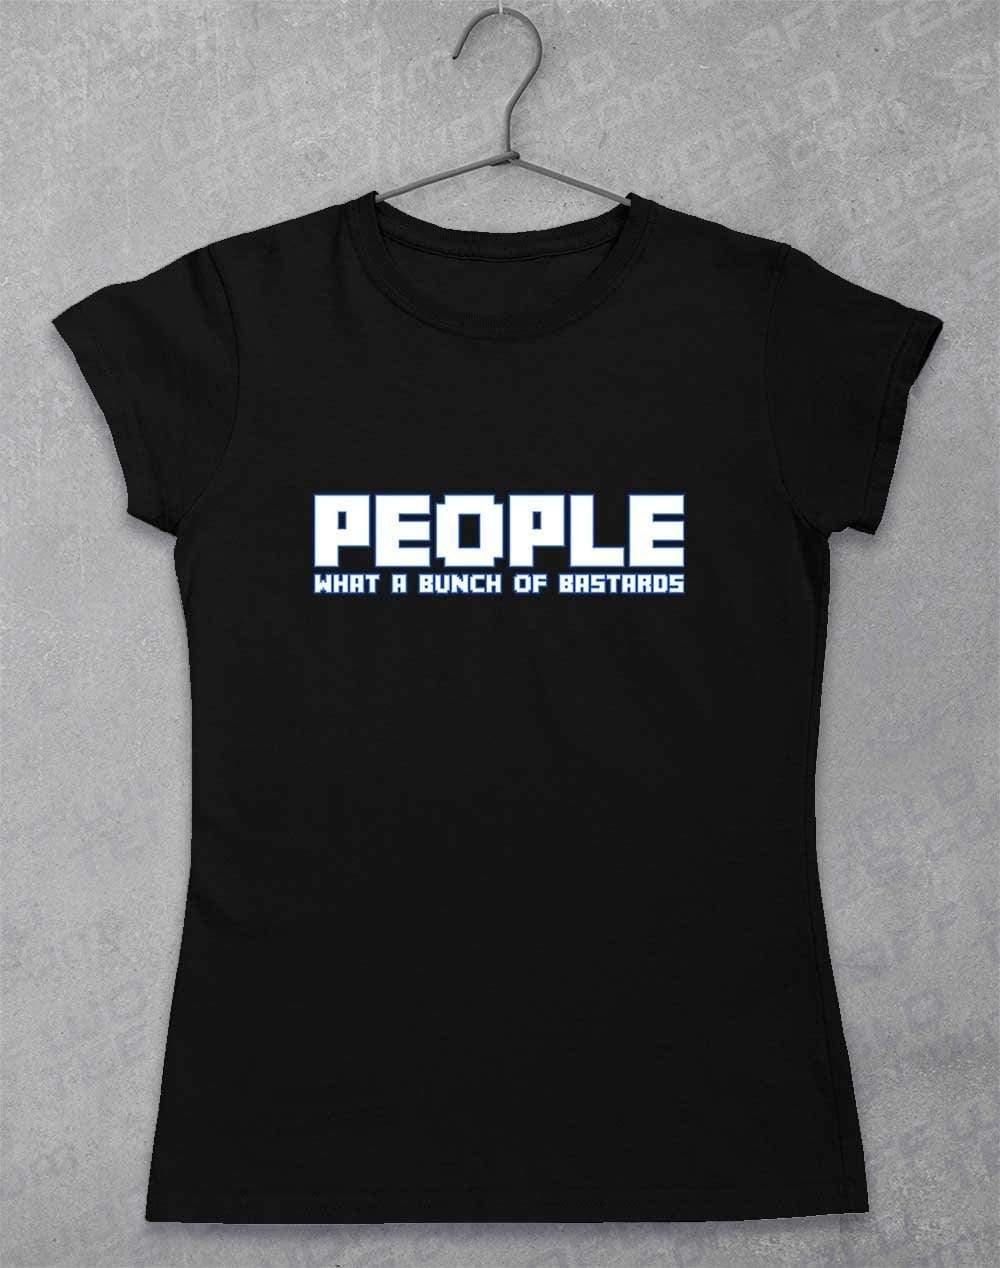 People = Bastards Women's T-Shirt 8-10 / Black  - Off World Tees